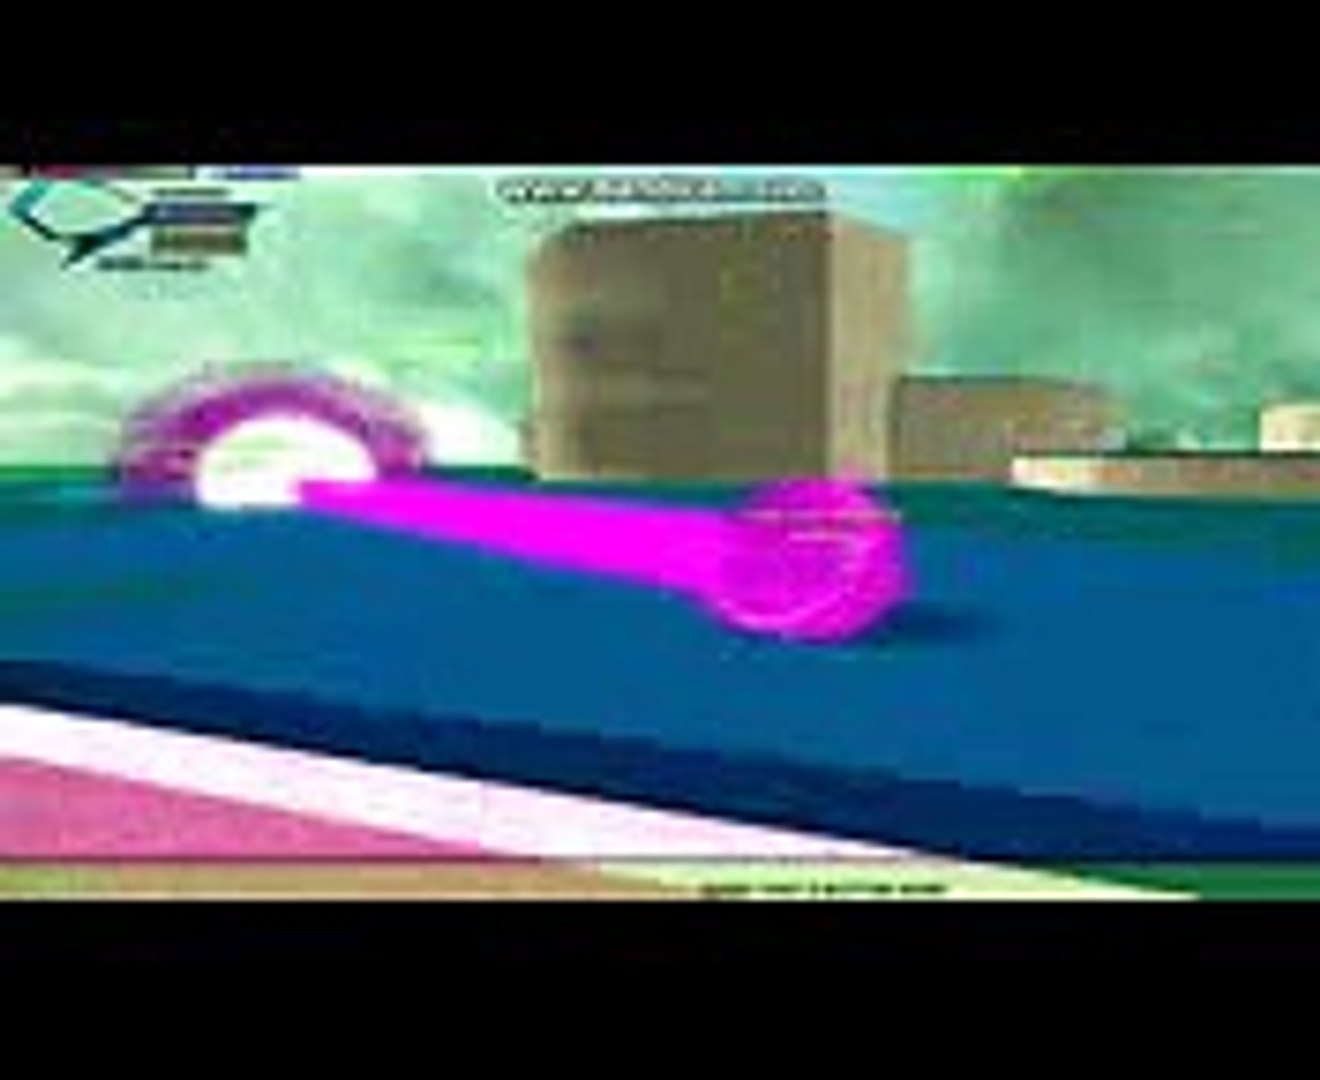 Roblox Dragon Ball Online Revelations Beta Gameplay 2 Video - krillin teaches the kamehameha roblox dragon ball online revelations episode 2